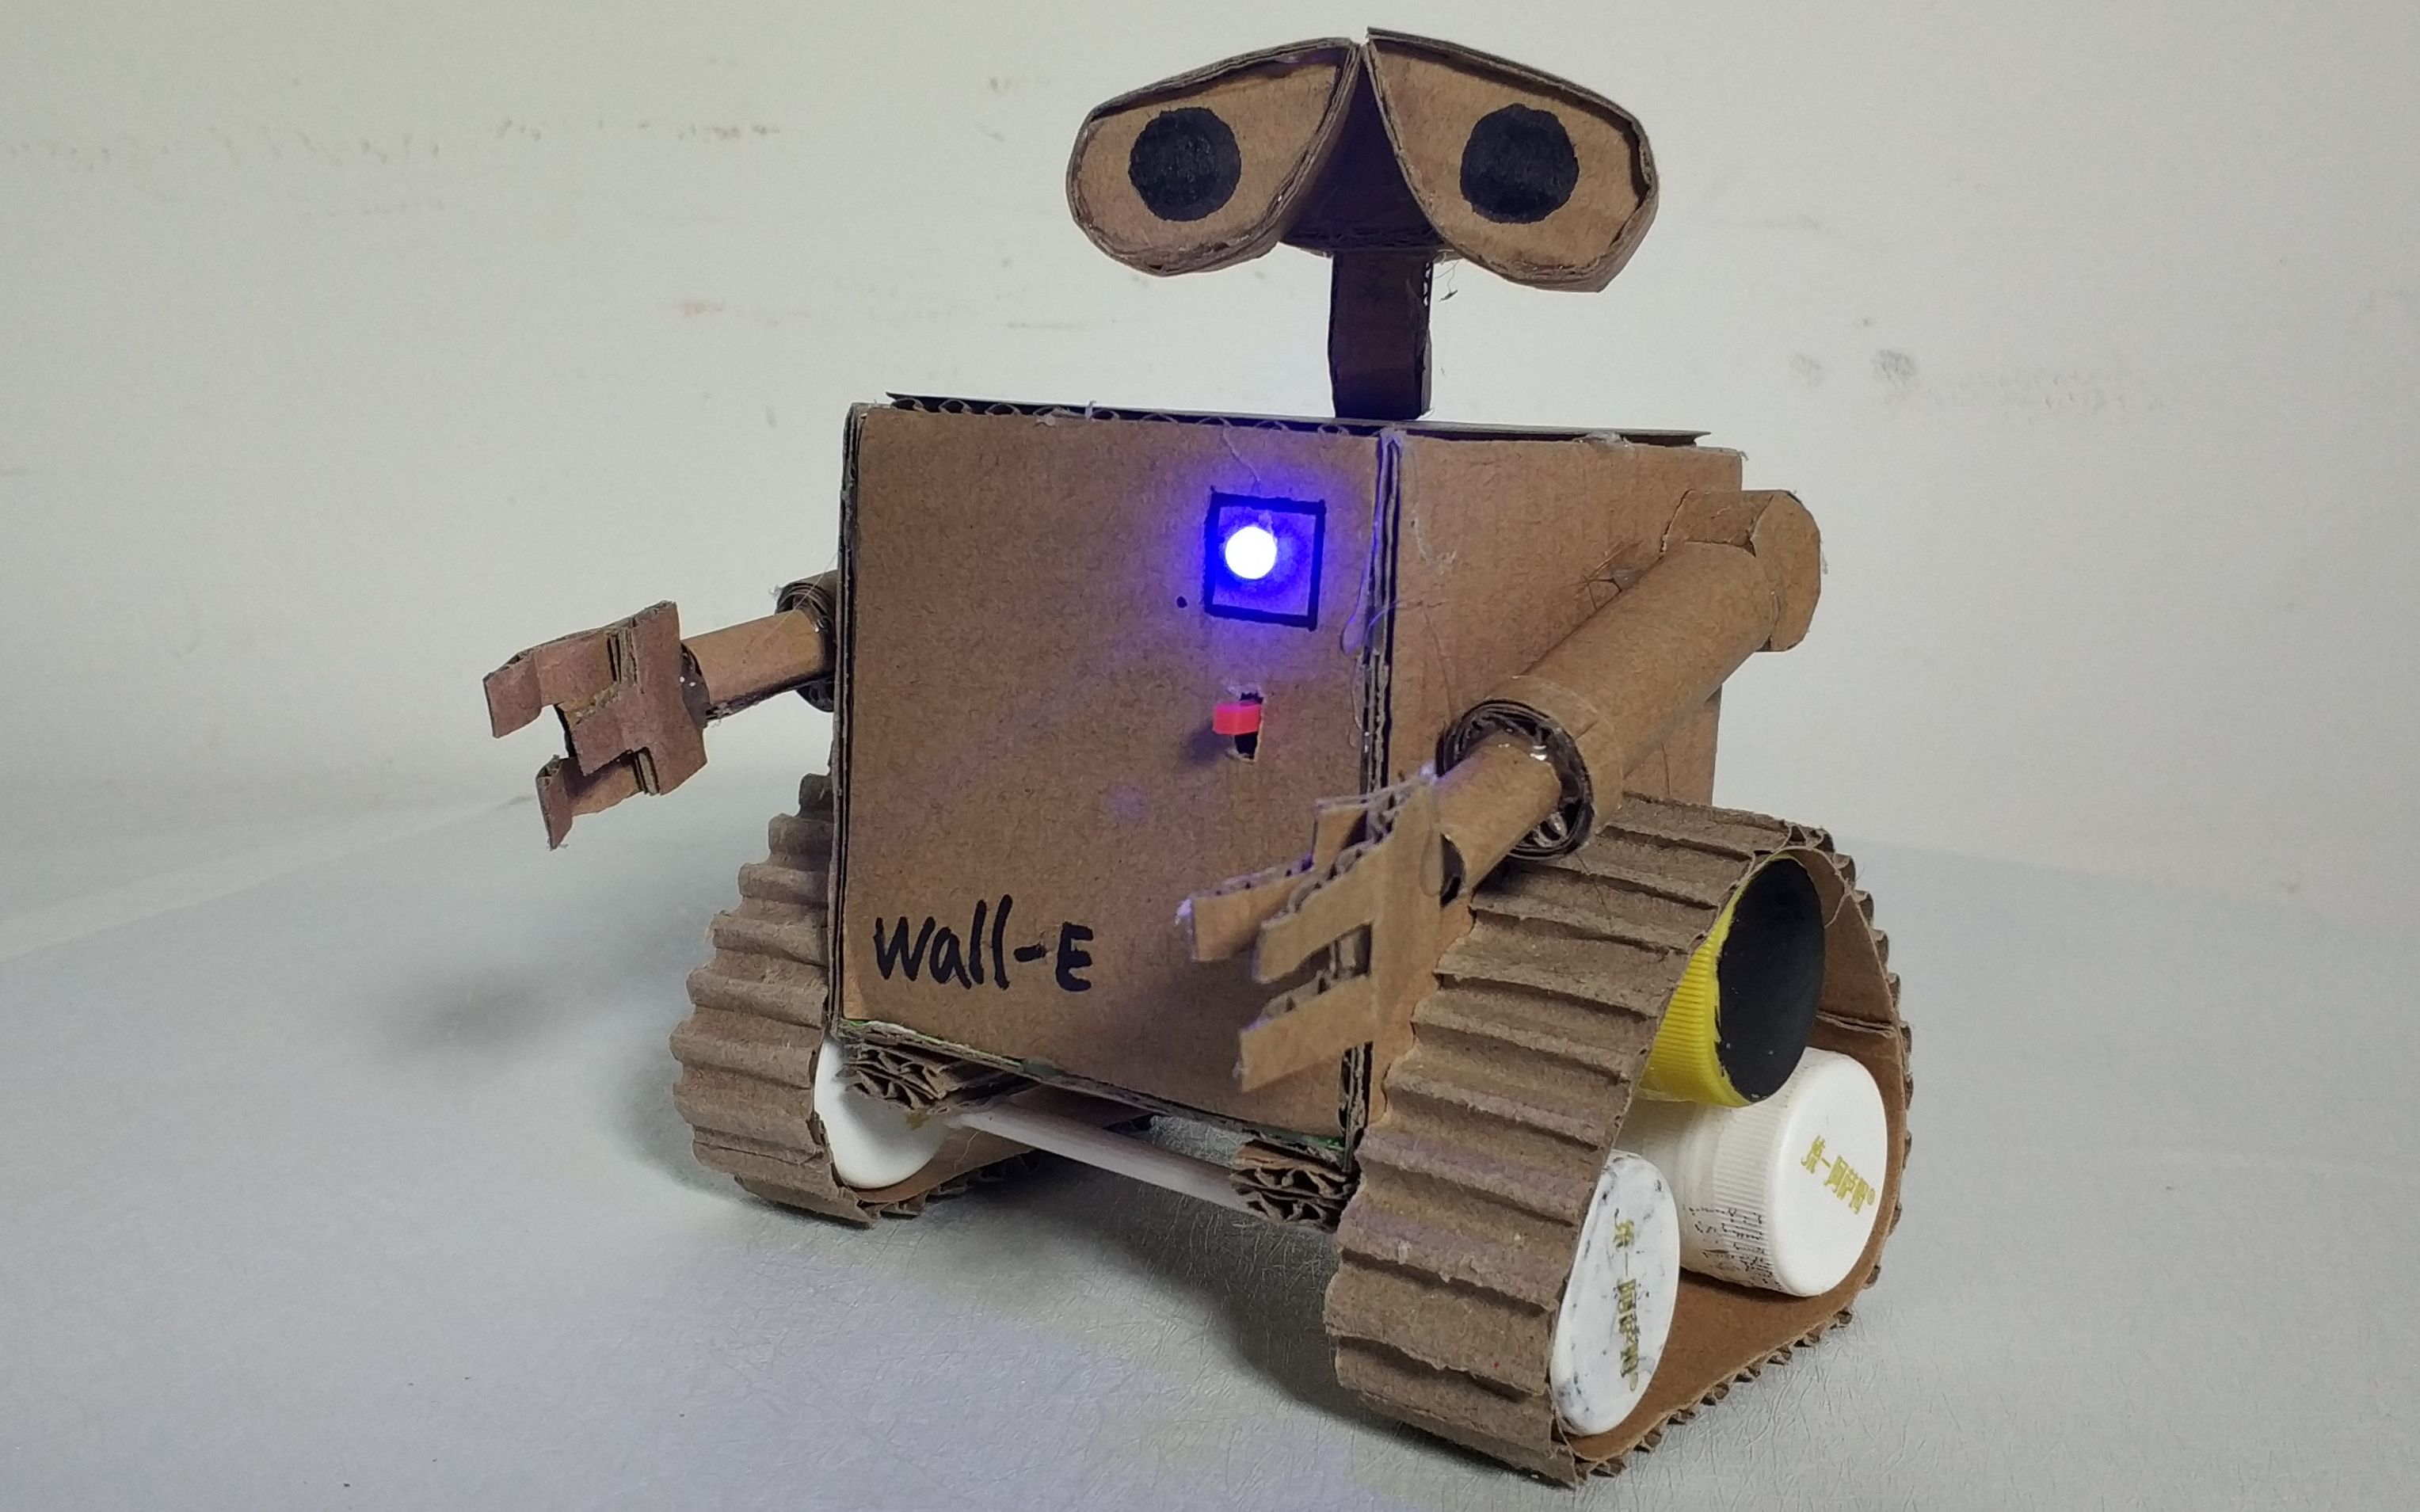 How to Make Box Robots: Kids’ Cardboard Box Craft Project | DK UK